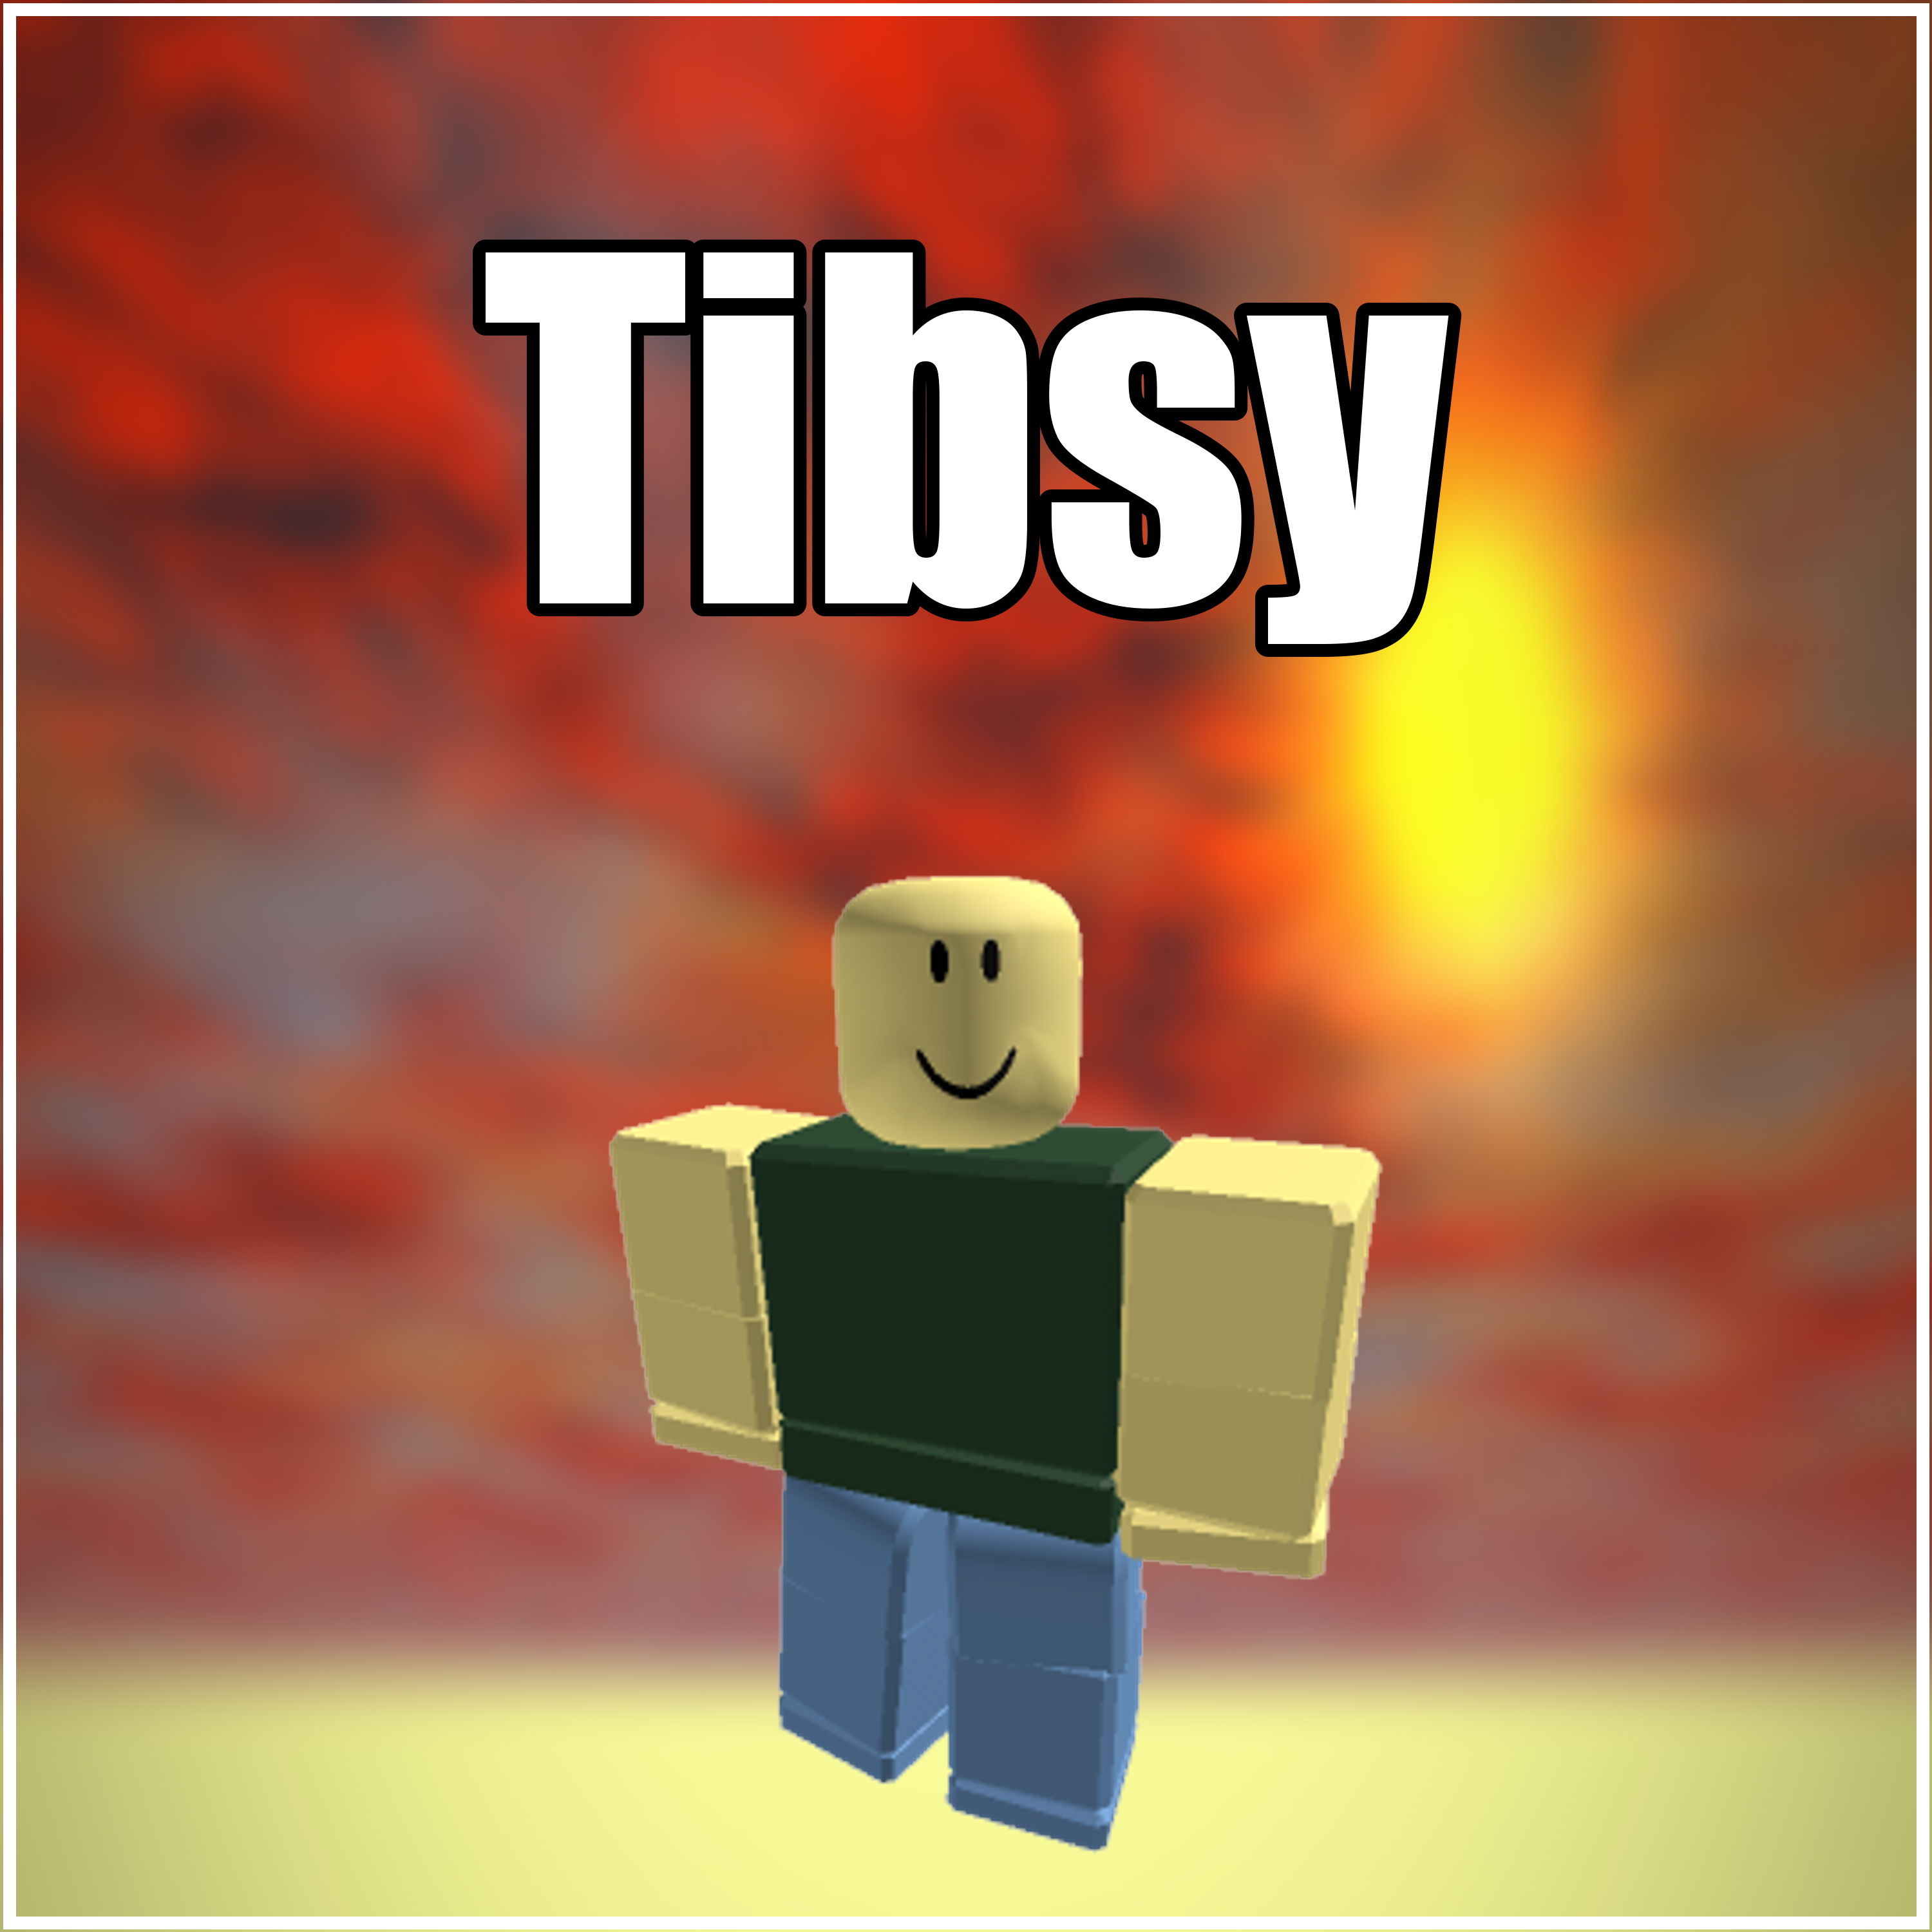 robruh RARE username "Tibsy" ROBLOX account guaranteed to be unverified!